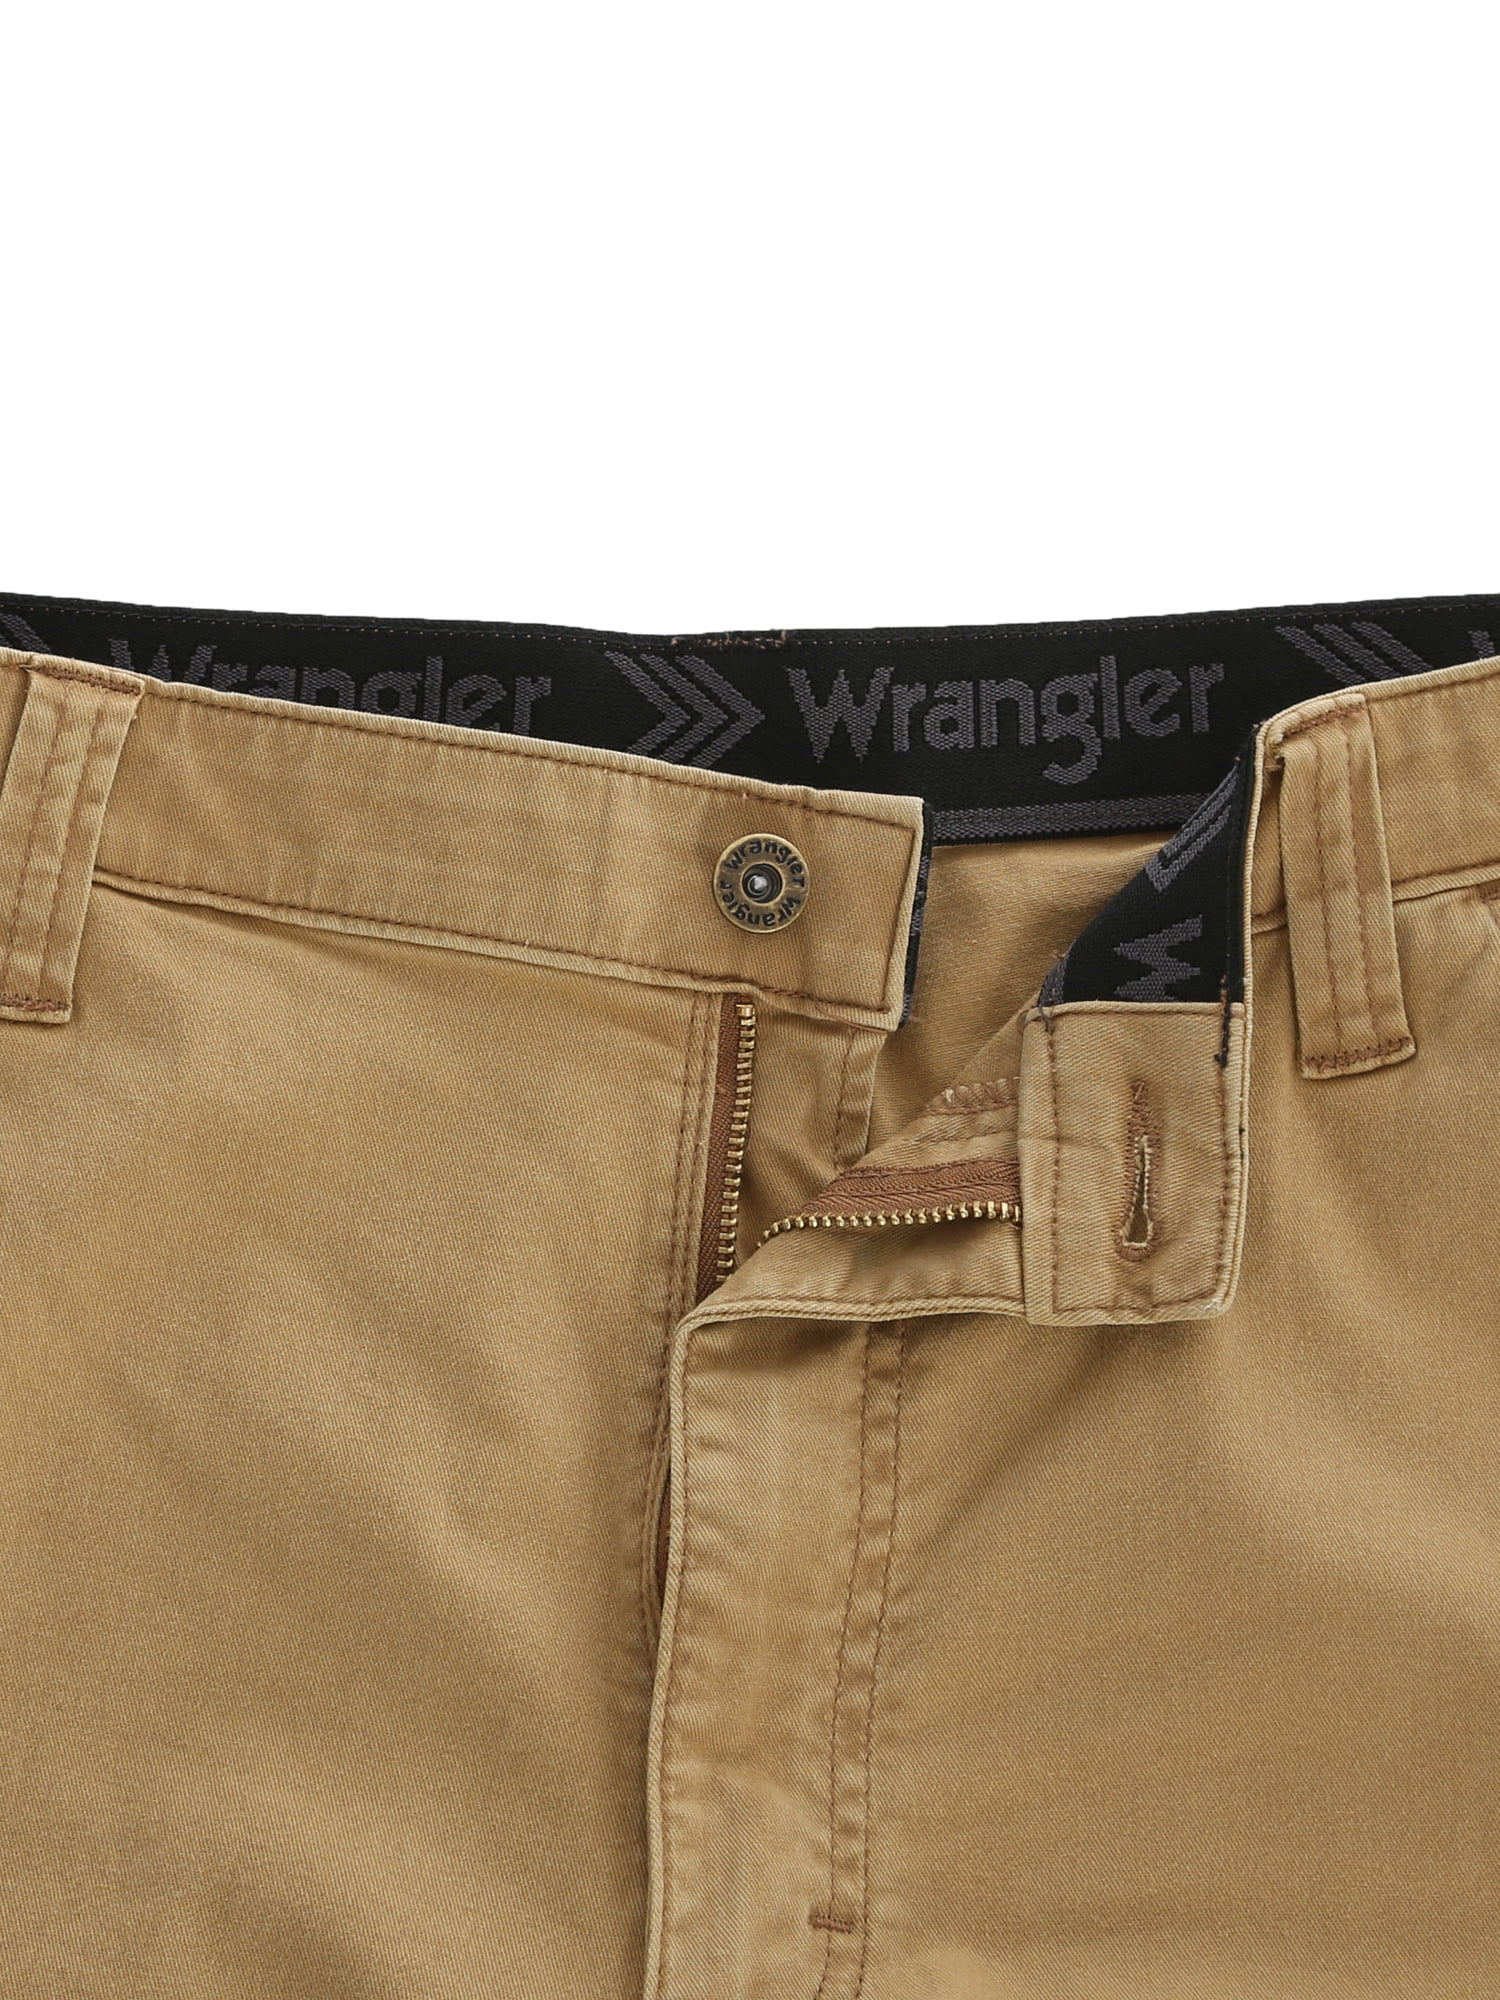 wrangler men's comfort solution series cargo pant